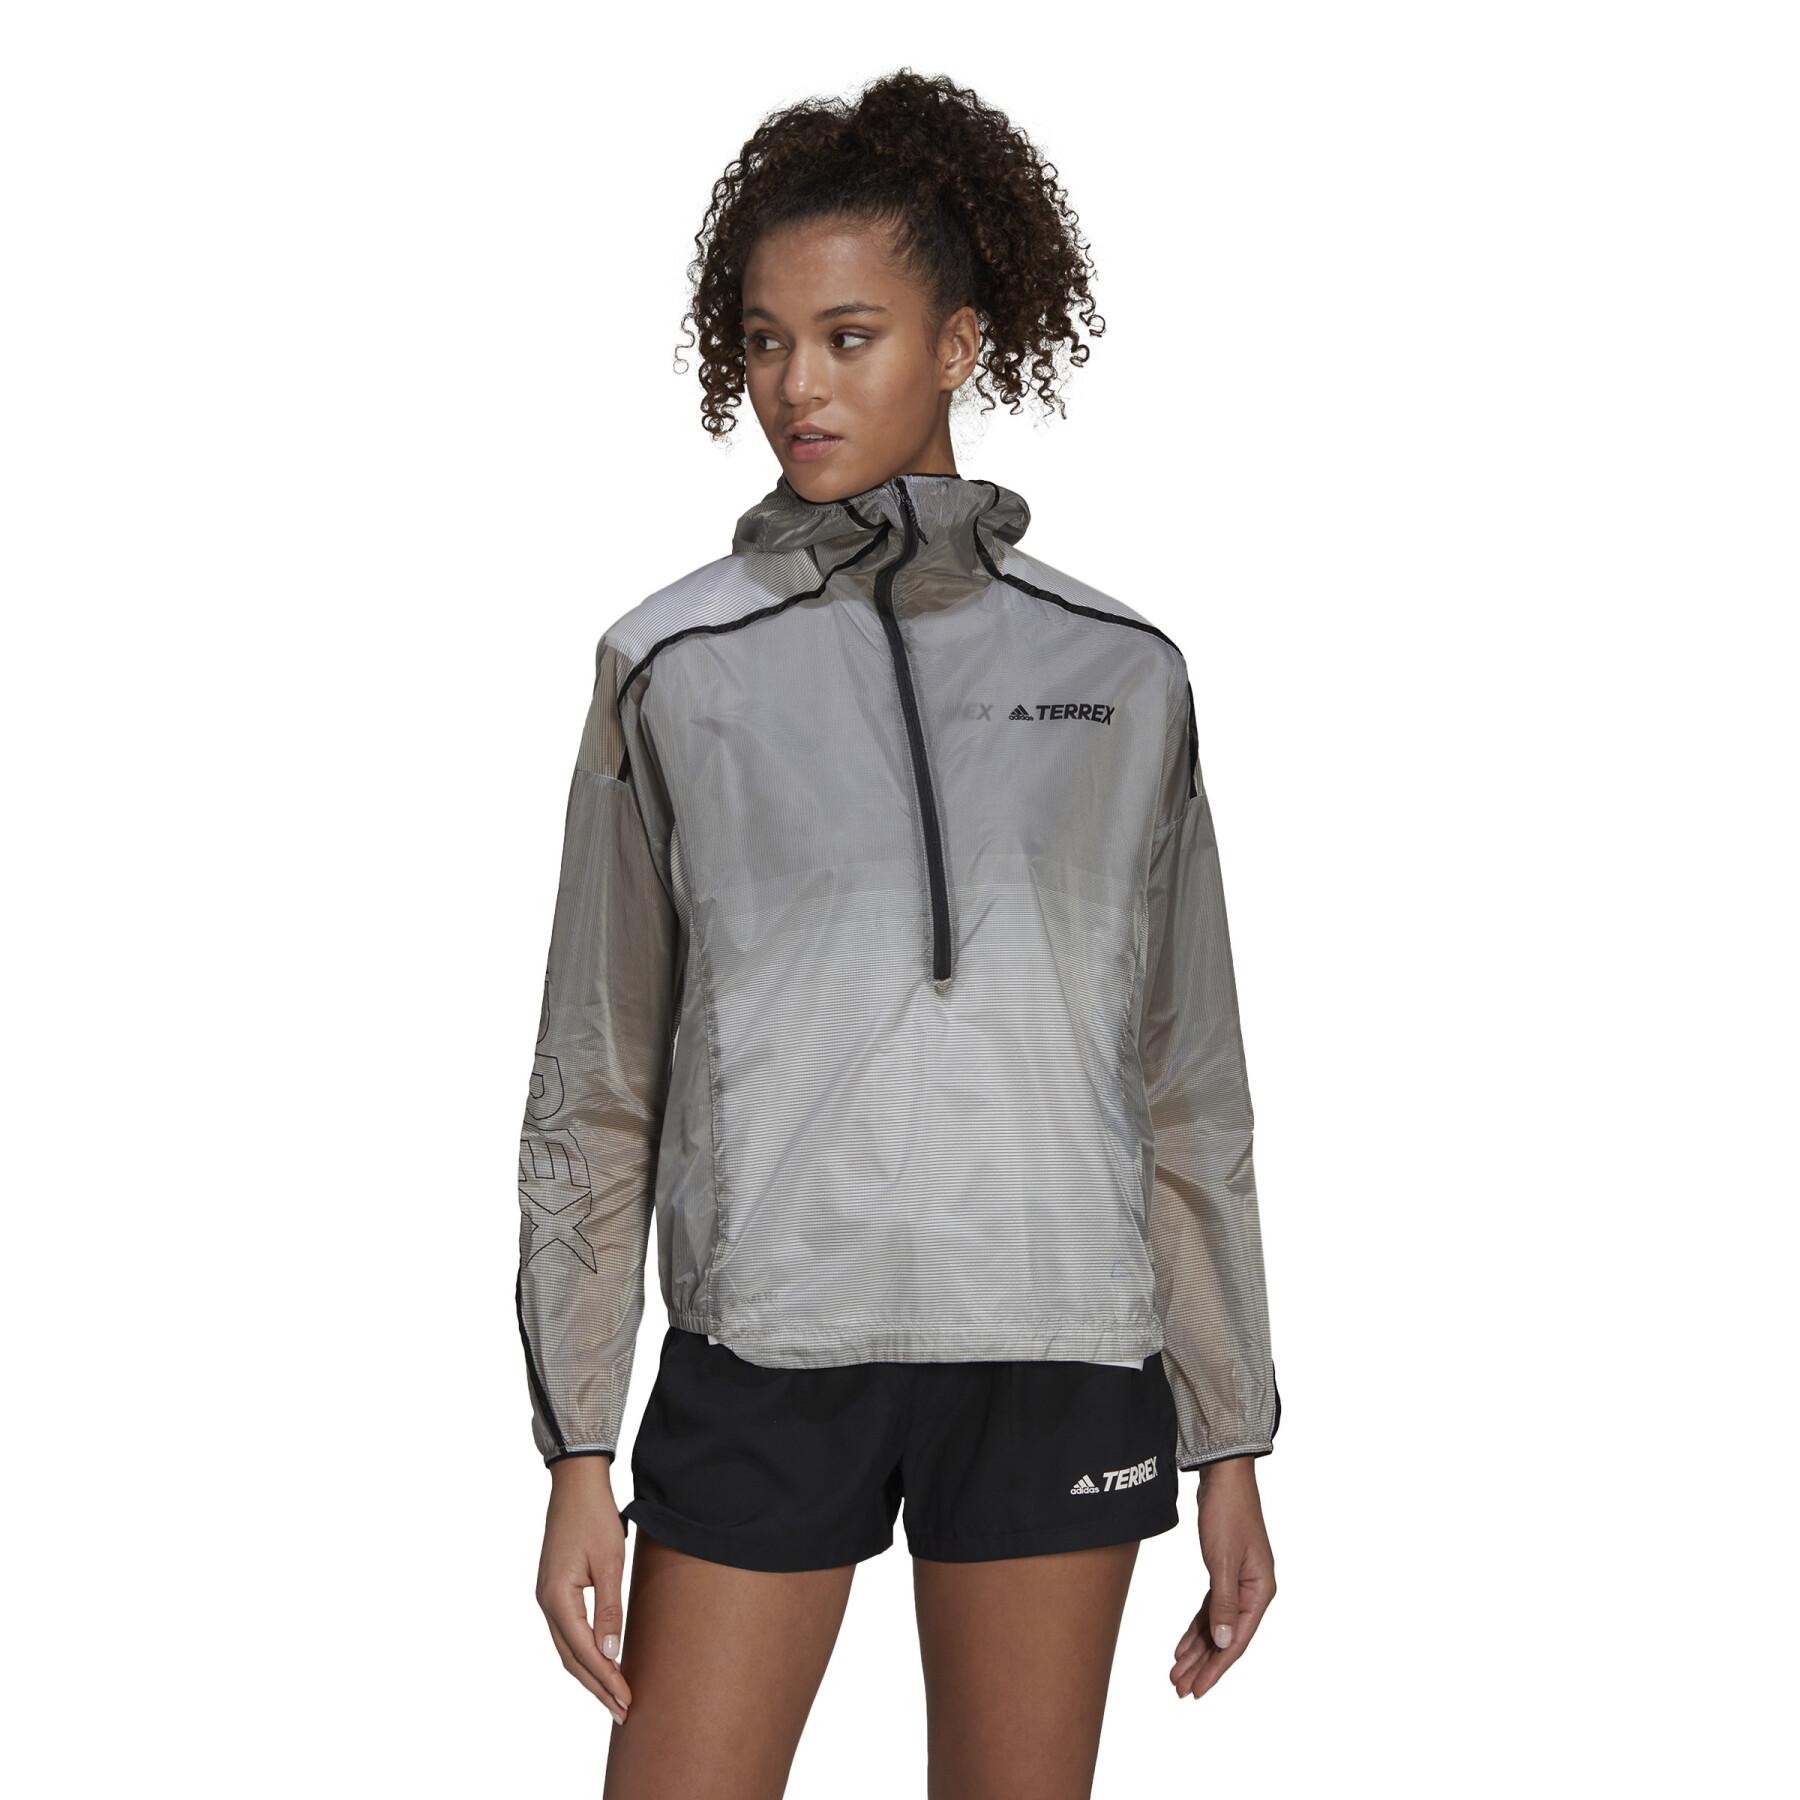 Women's jacket adidas Terrex Windweave Pro - adidas - Textile Running Women - Running